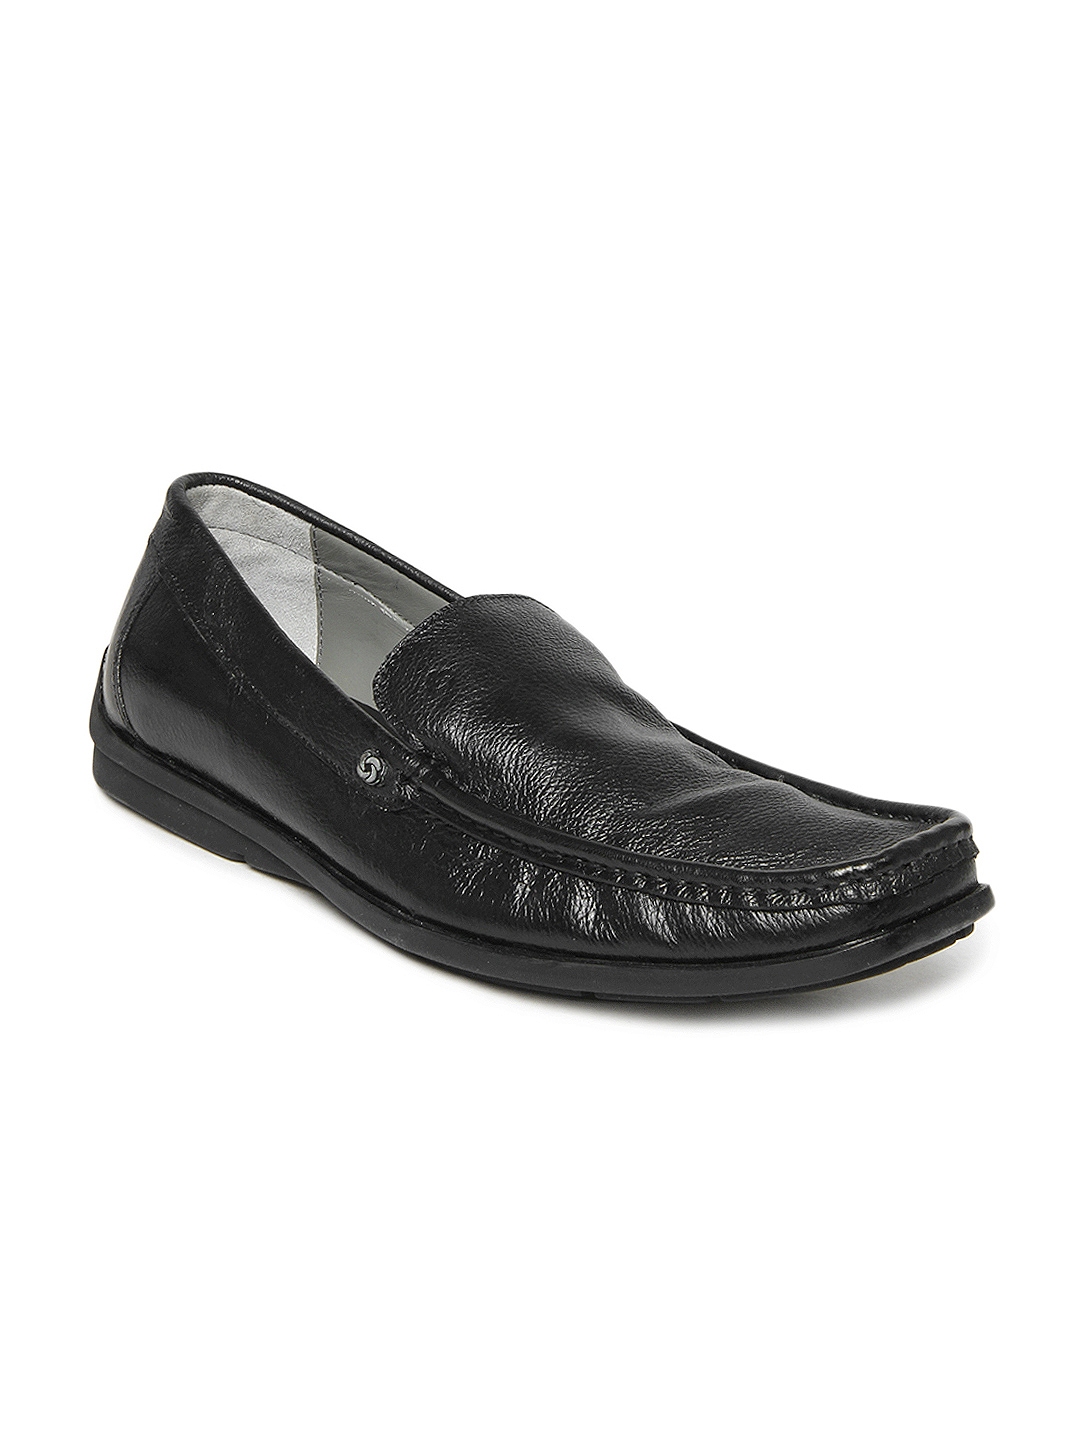 Buy Samsonite Men Black Leather Loafers - Casual Shoes for Men 204016 ...